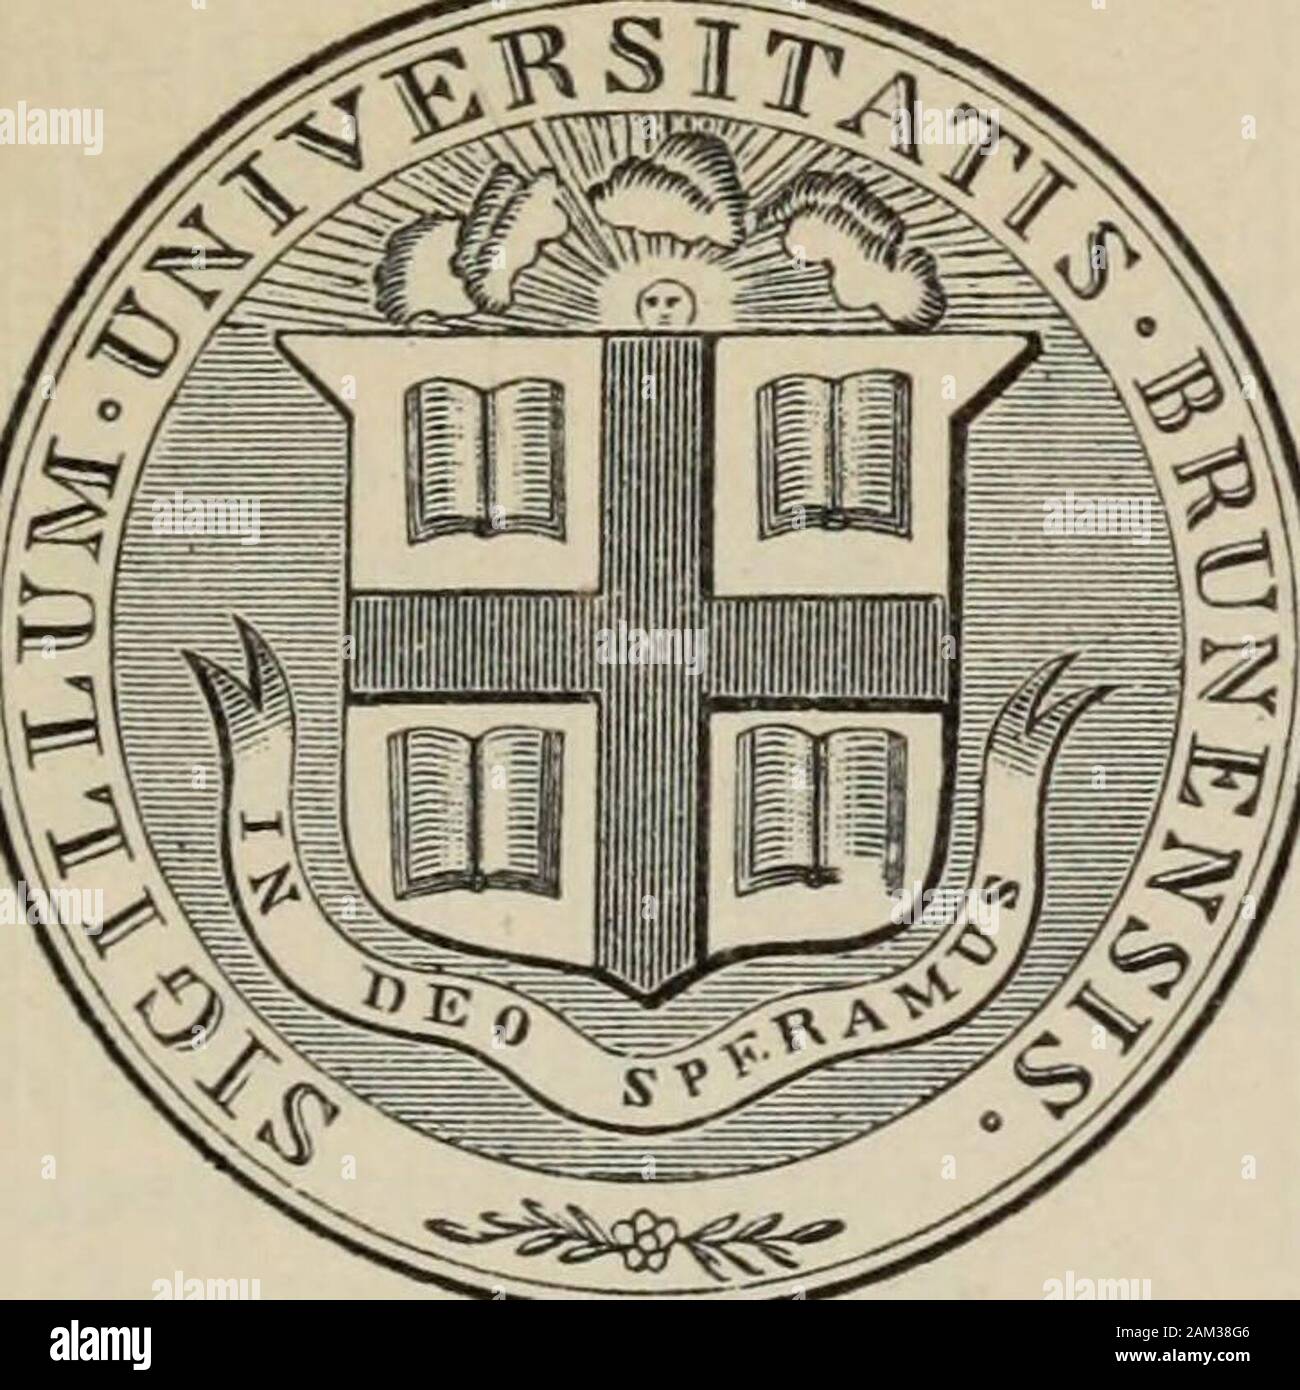 Catalogue of the officers and students of Brown University . 3rurvv&gt;k u) Jjlu OF THE UNIVERSITY of ILLINOIS. CATALOGUE Officers and Students BROWN UNIVERSITY 1896-97. PROVIDENCE, R. I.REMINGTON PRINTING CO., 63 WASHINGTON STREET 1897 CALENDAR 1896-97 - &gt; - ON 001—1 1 1 1 •8 1 I 1 1 ON 00 1 1 i 1 1 f 3 00 ?8 1 - 1 July 1 2 3 4 Jan. 1 2 July 1 2 5 6 7 8 9 10 11 3 4 .5 b 7 8 9 4 5 b 7 8 9 12 [3 M lS 16 17 18 10 11 12 [3 H l5 16 11 12 13 [4 15 ib j 19 20 21 22 23 24 25 17 18 I9J20 21 22 23 18 19 20 21 22 23 - 26 27 28 29 30 3i 24 2.5 2627 28 &gt;9 30 25 20 27 28 29 3°; Aug. 1 31 2 3 4 5 6 7 Stock Photo